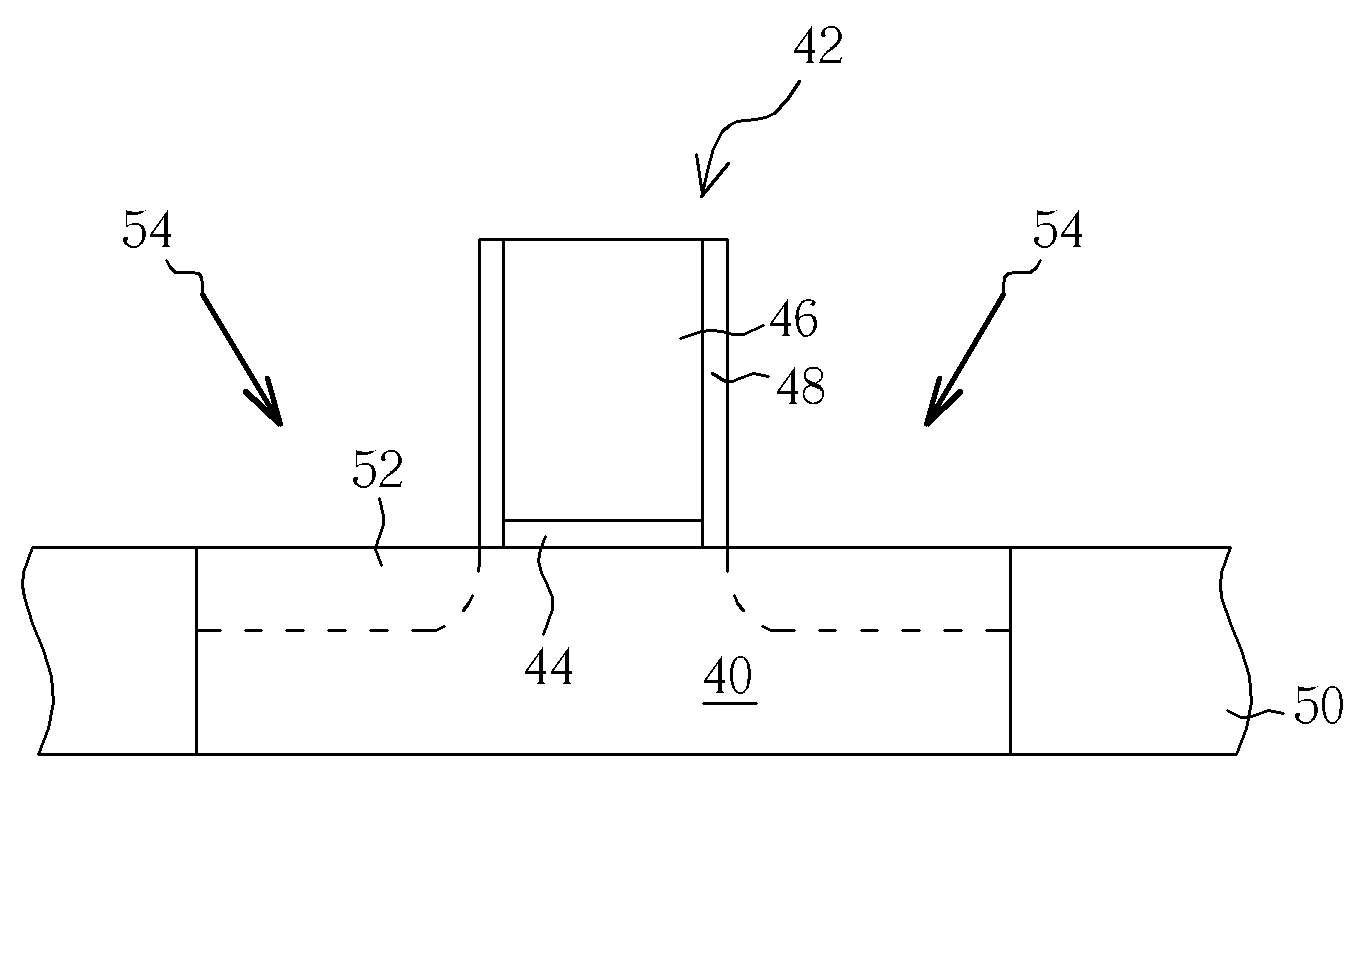 Method for fabricating an NMOS transistor